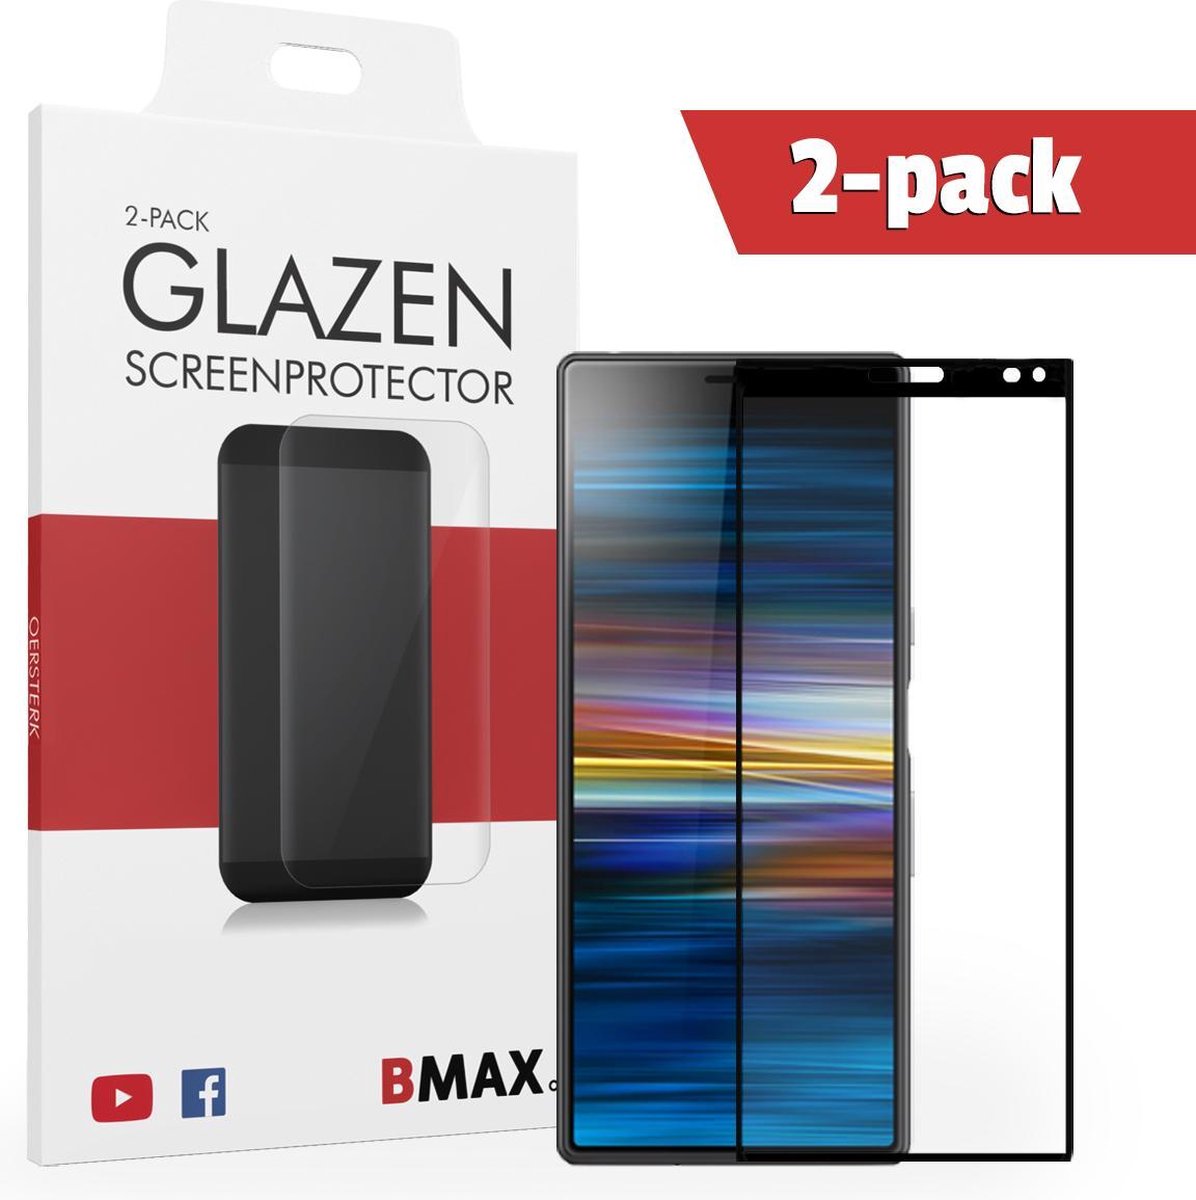 2-pack Bmax Sony Xperia 10 Plus Screenprotector - Glass - Full Cover 2.5d - Black